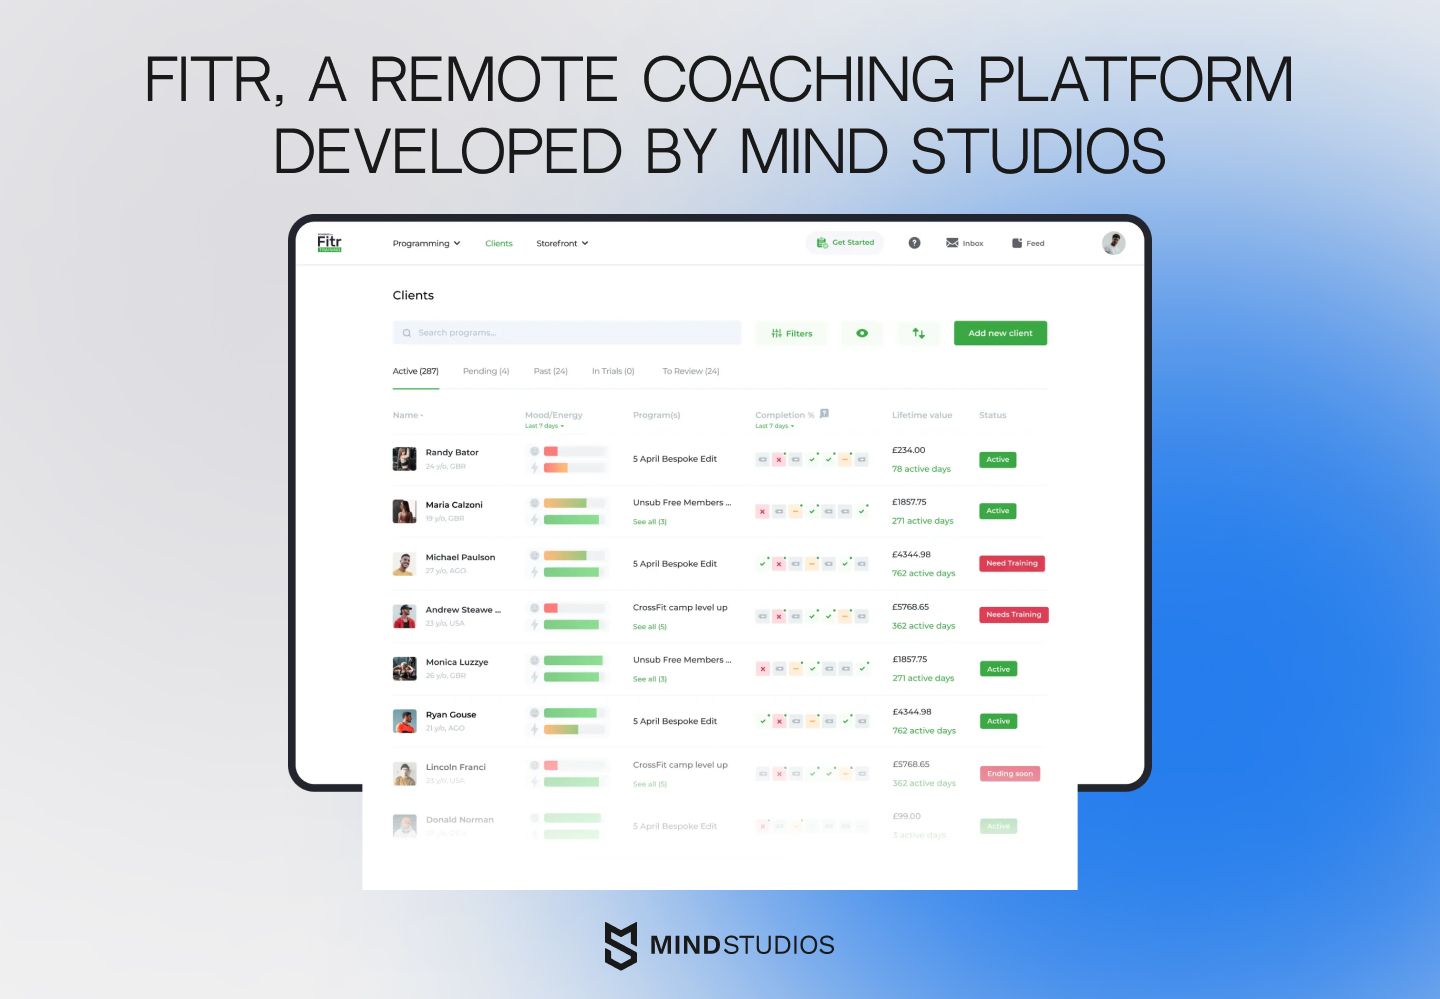 Fitr, a remote coaching platform developed by Mind Studios